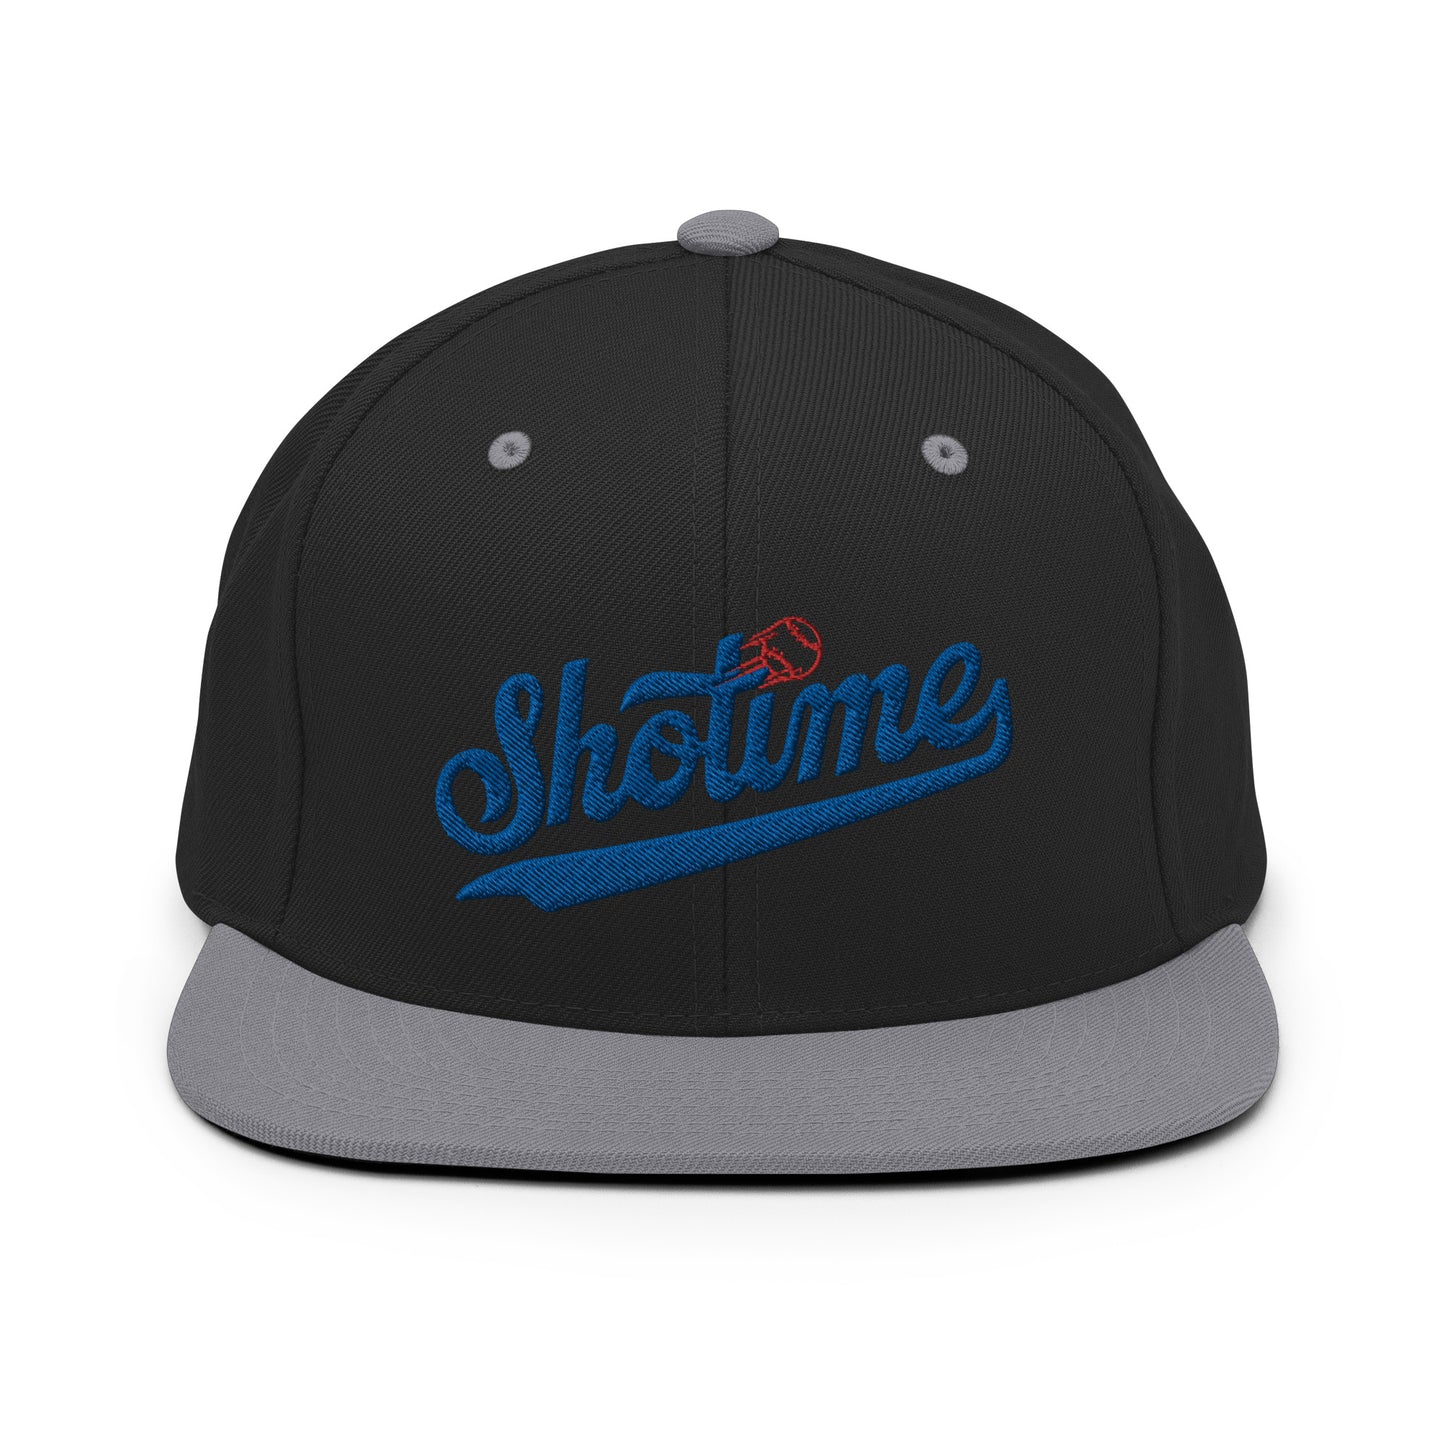 ShoTime Script Snapback Hat